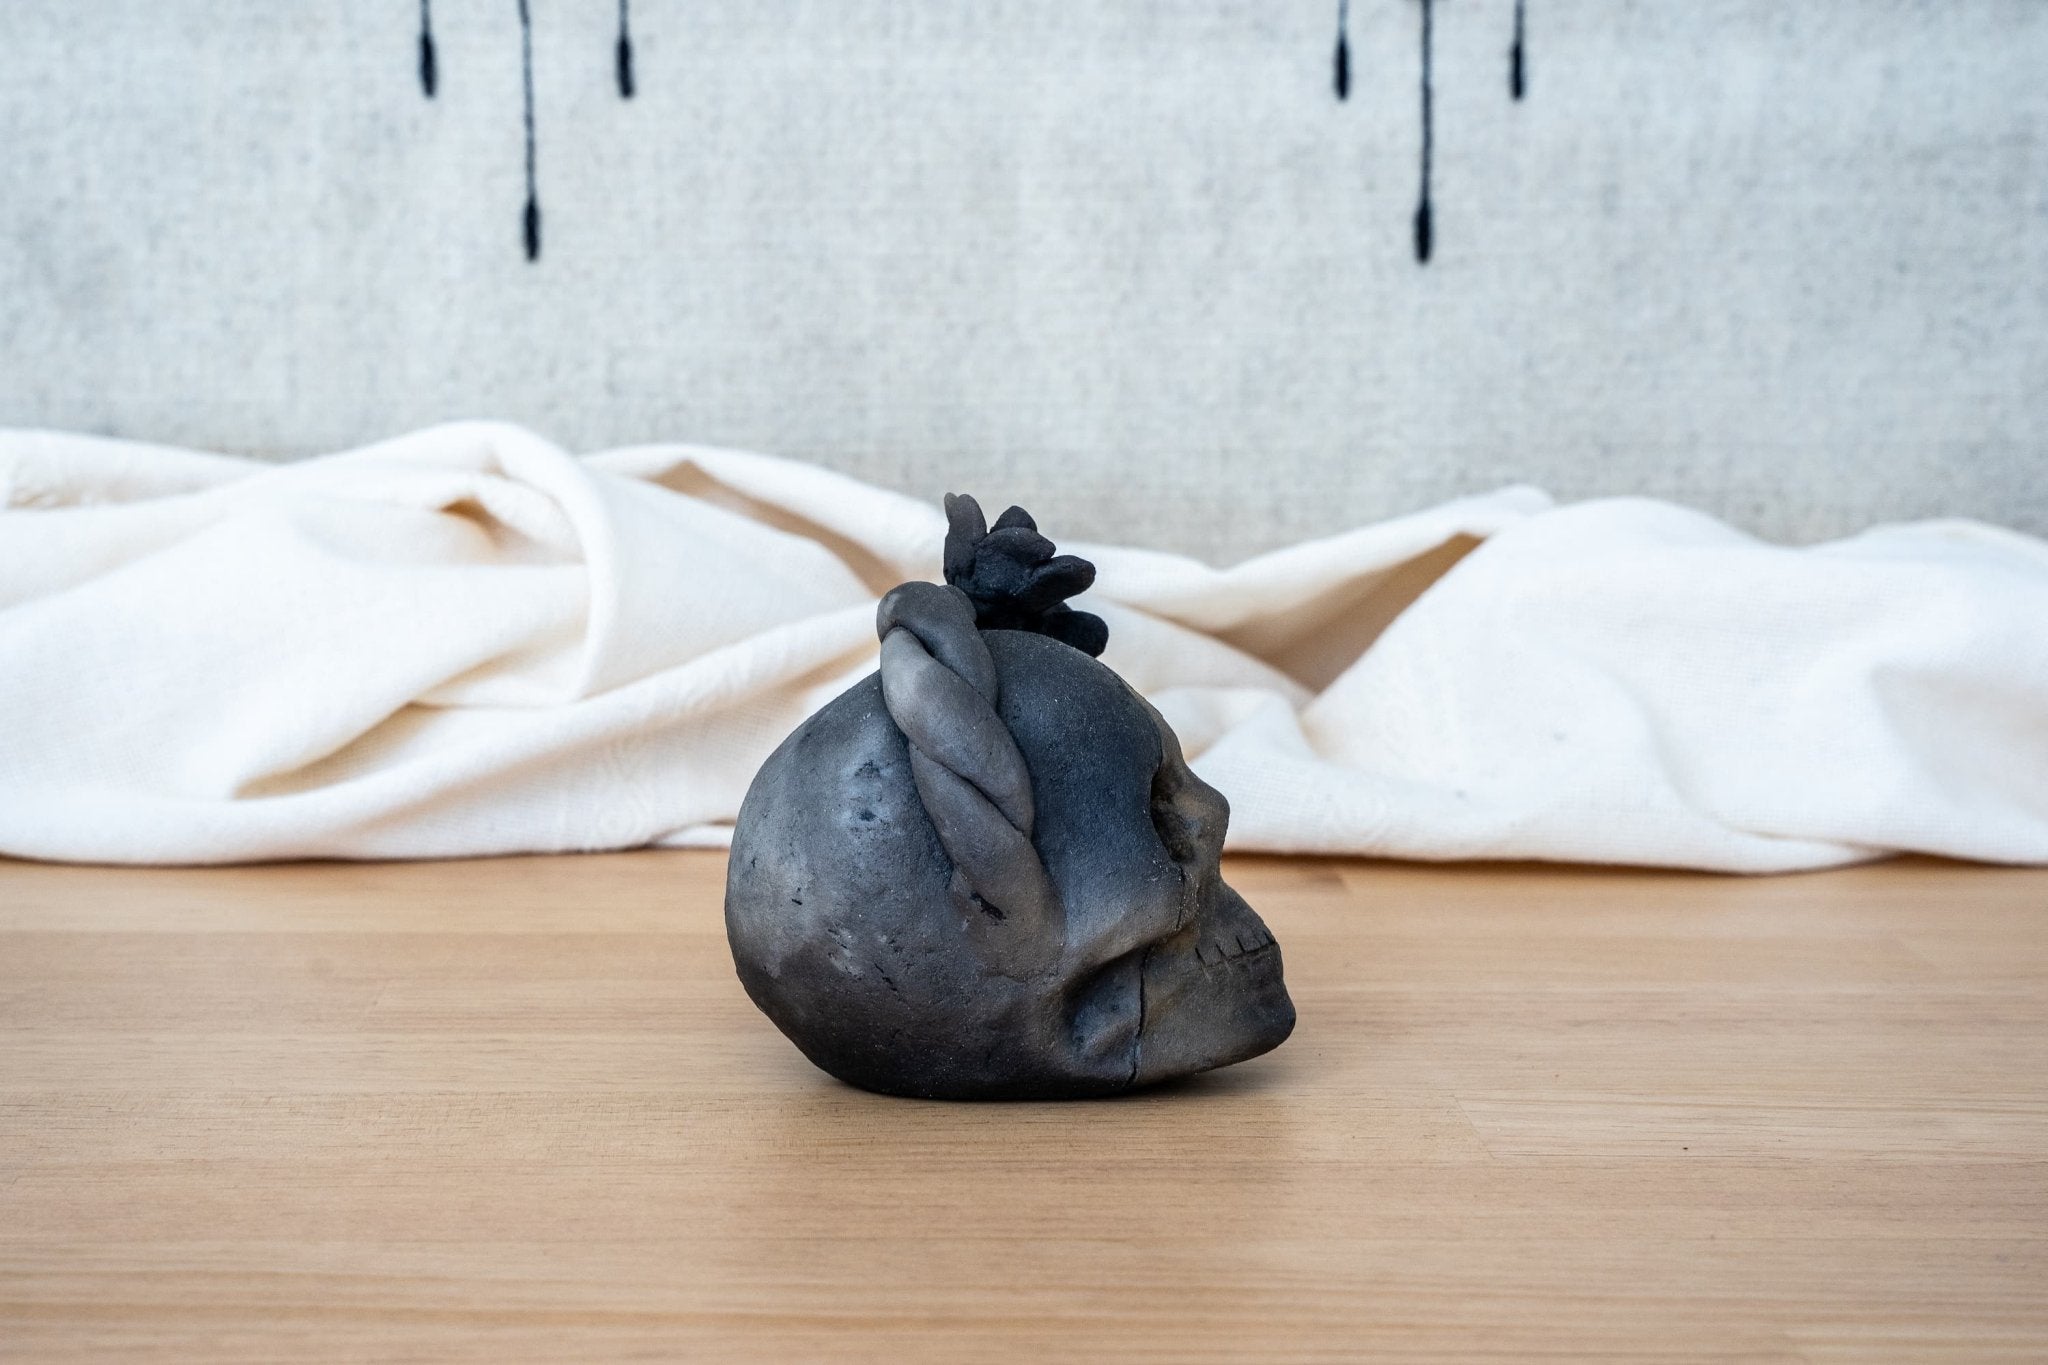 Higher Perspective Skull by Leticia Blanco & Fernando Peguero - Wool+Clay